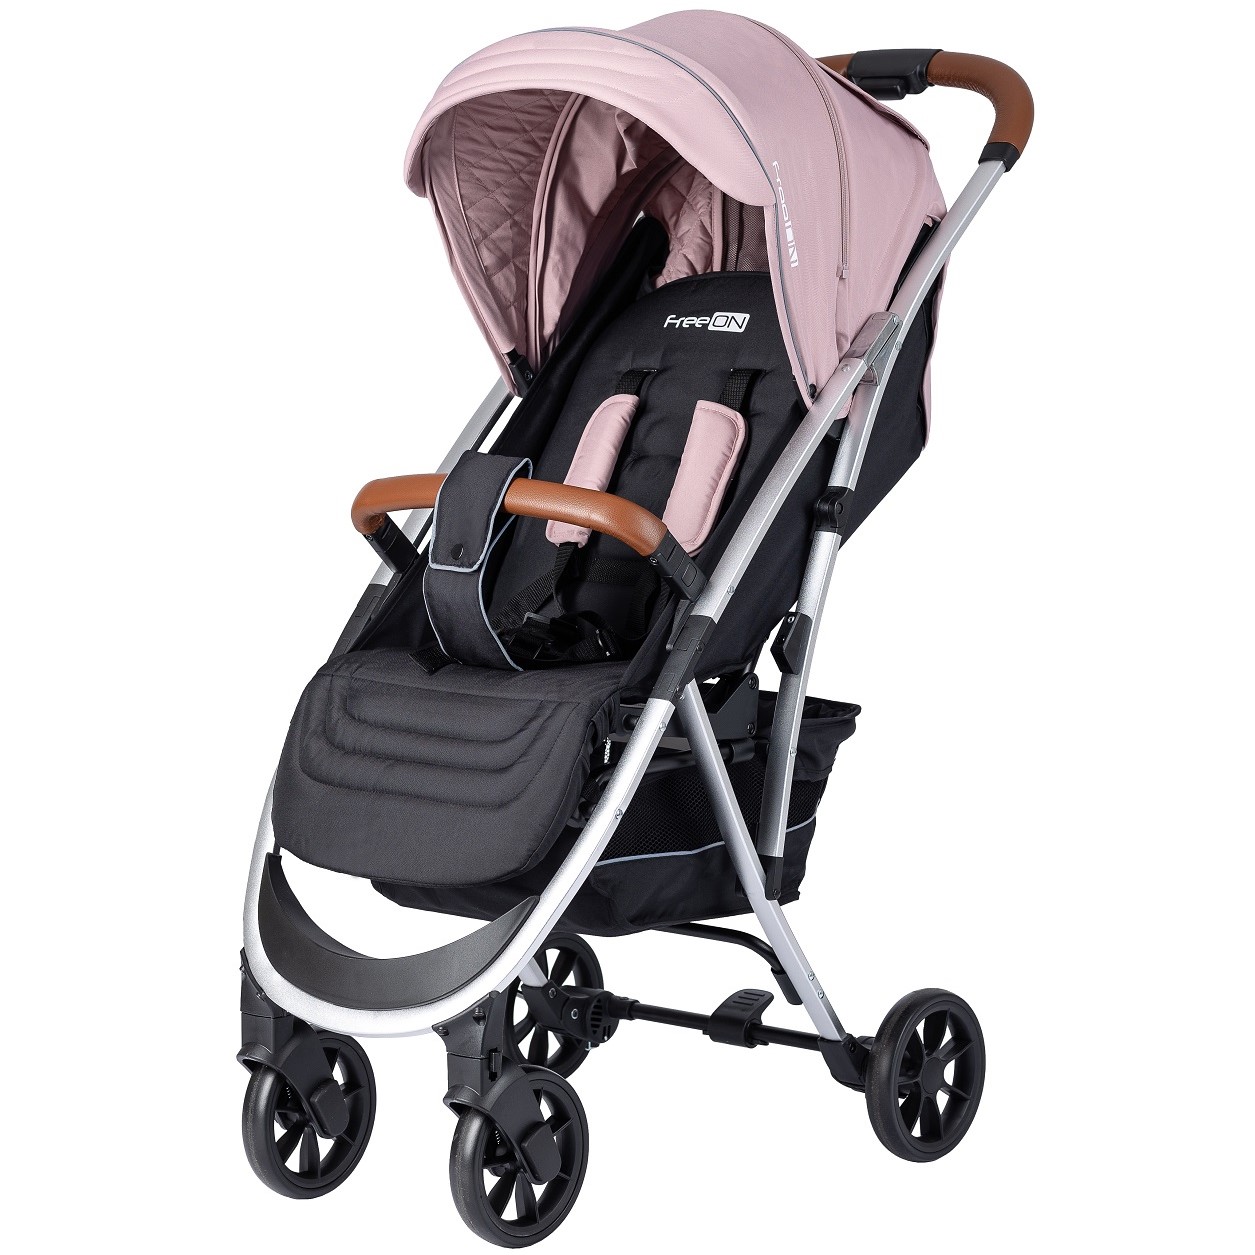 Прогулочная коляска для ребенка FreeON LUX Premium Dusty Pink-Black - фото 1